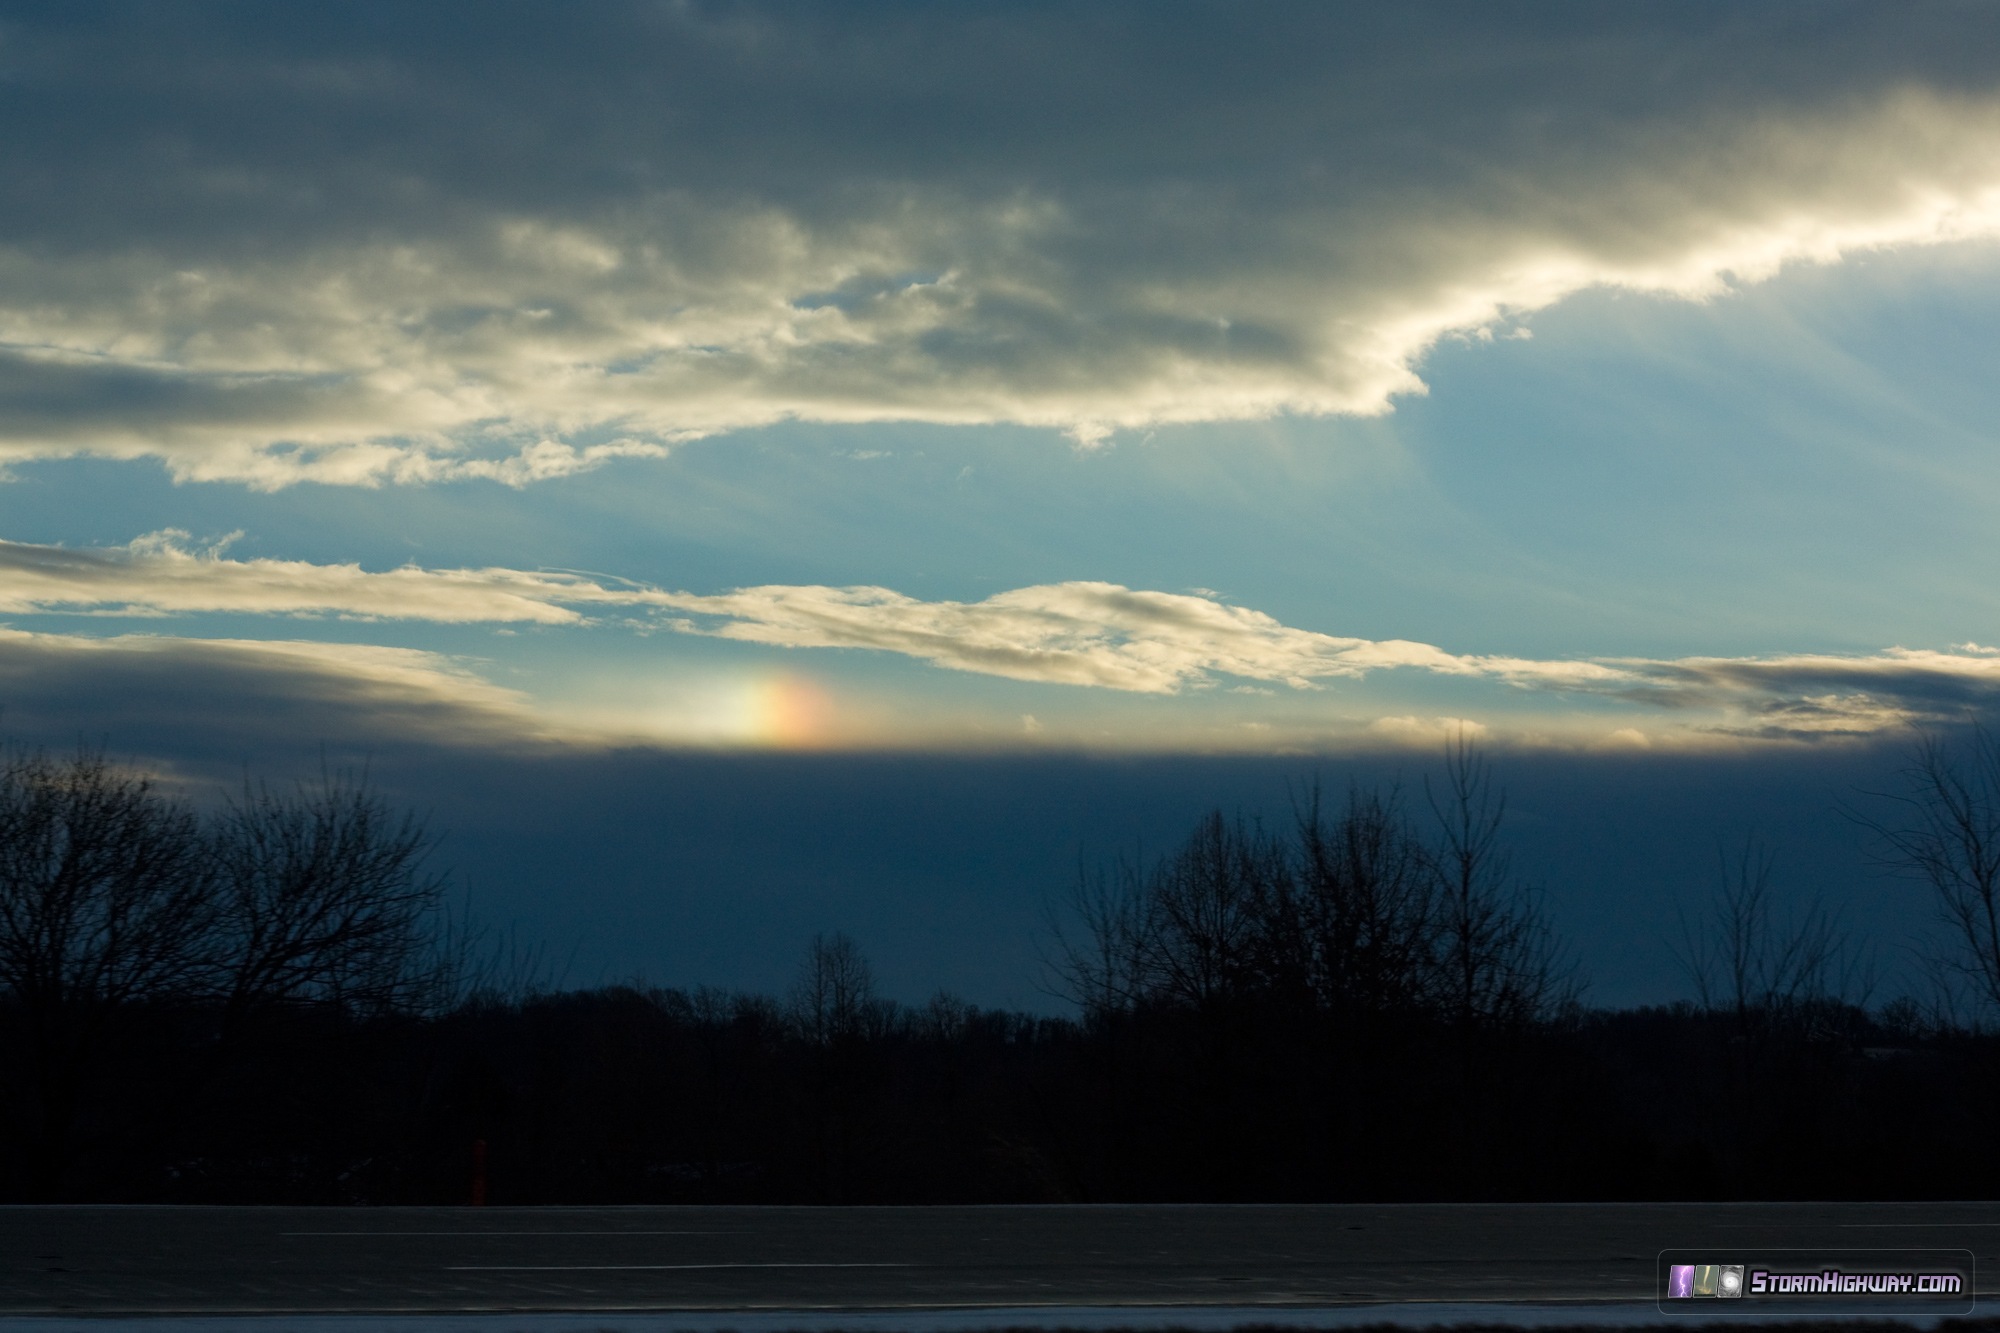 Sun dog - Collinsville, IL - January 16, 2014